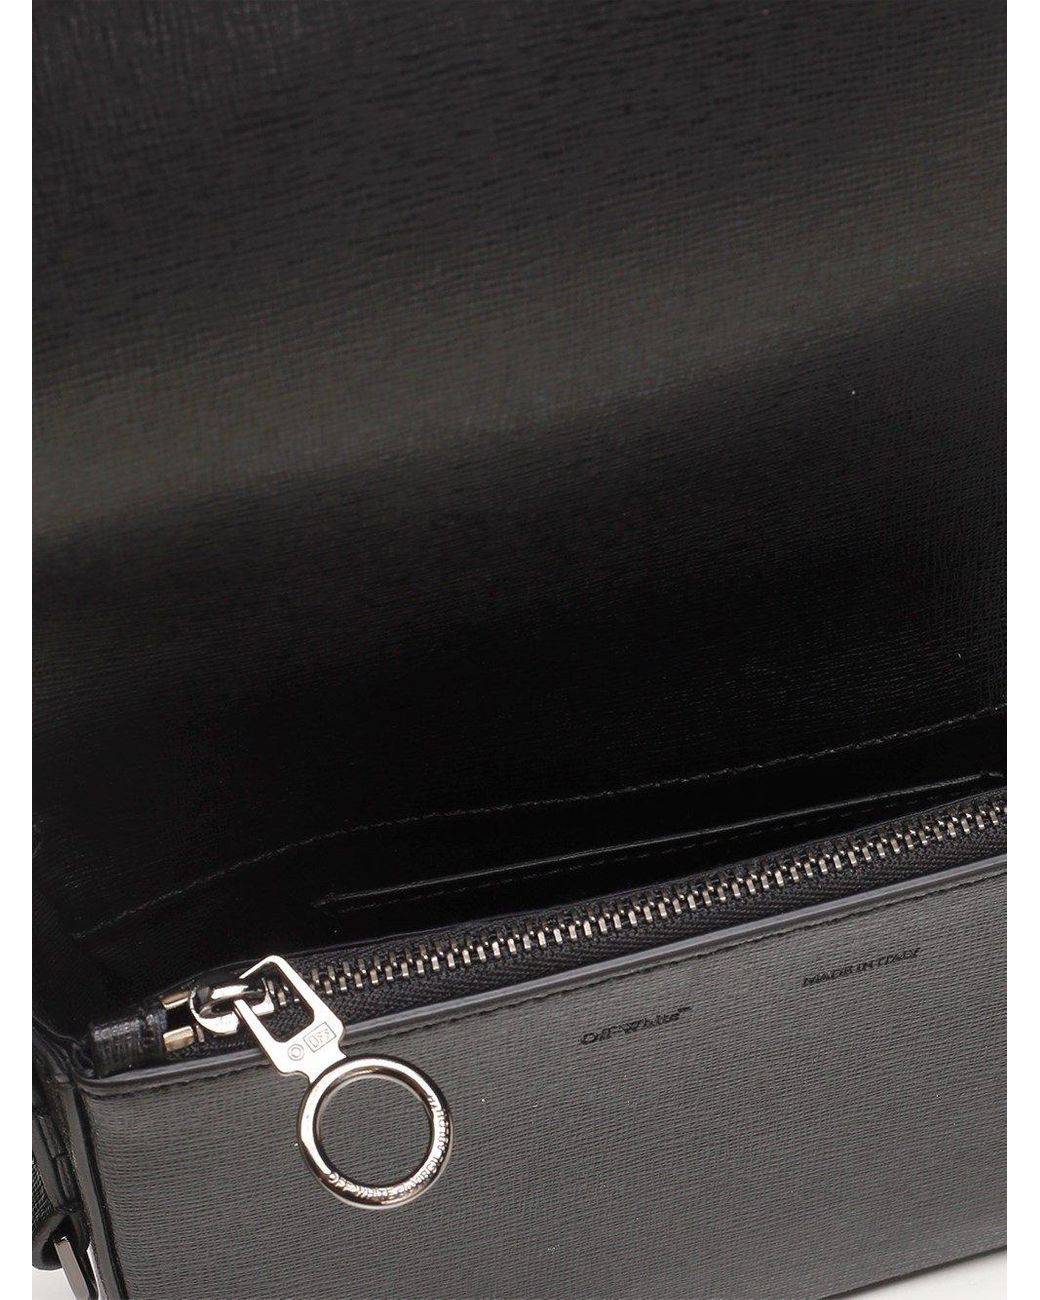 Buy Off-White Diag Flap Bag 'Black/White' - OWNA011F20LEA0041001 - Black